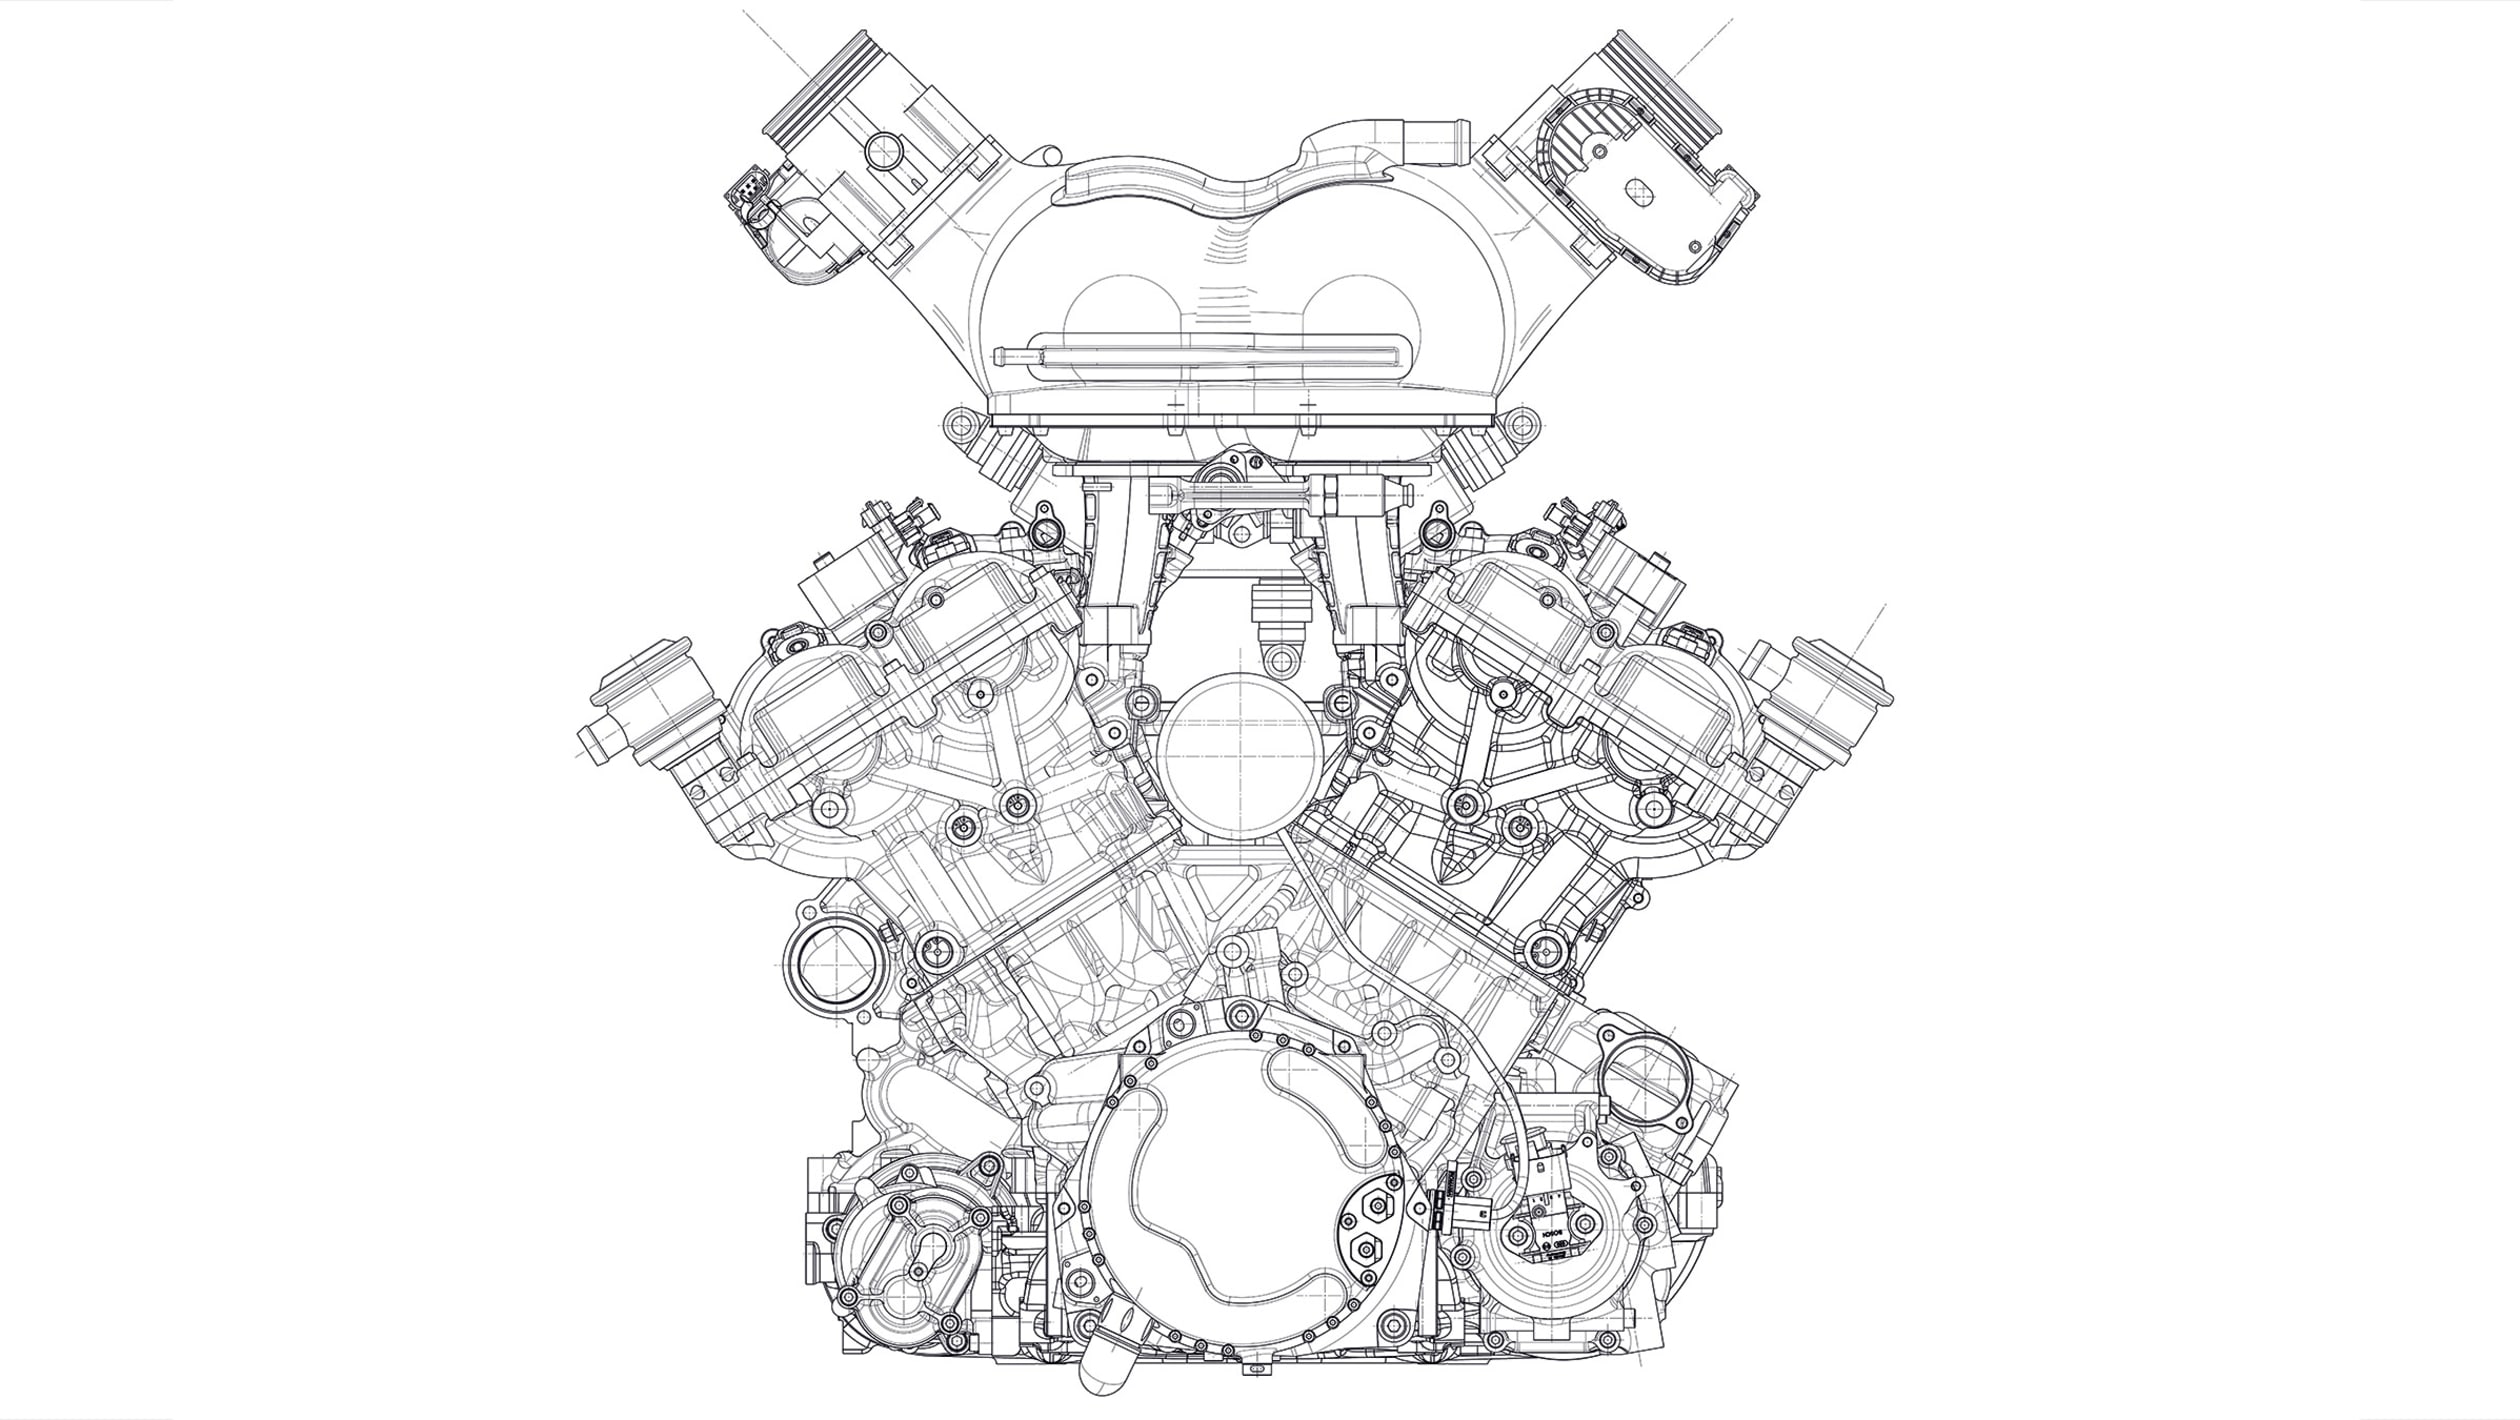 aria-label="Gordon Murray T50 engine"